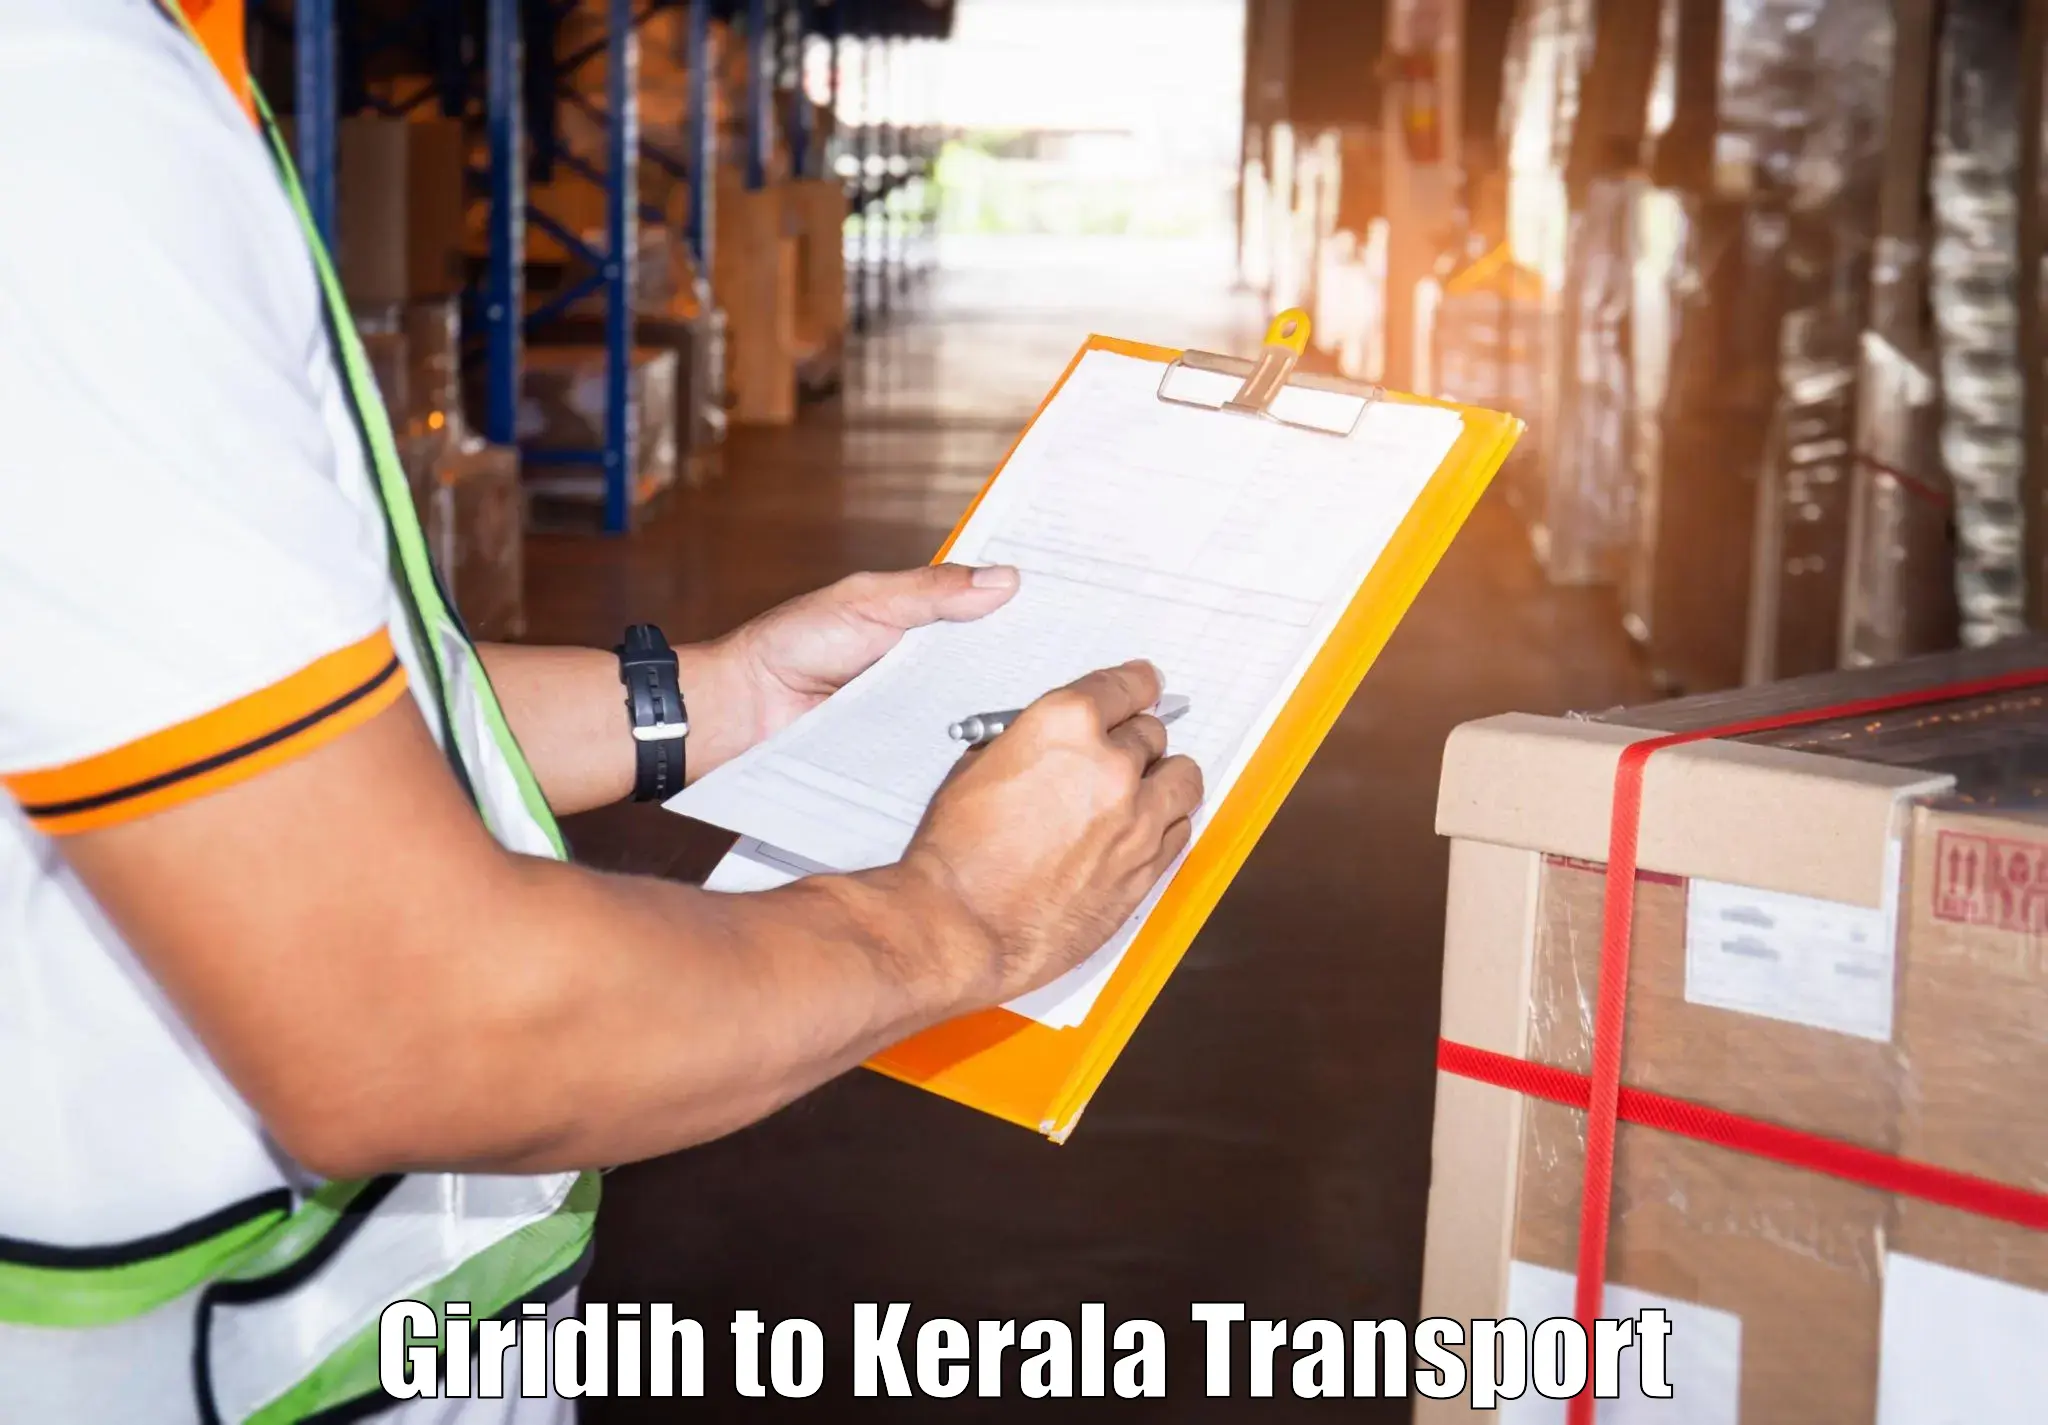 Container transport service Giridih to Guruvayur